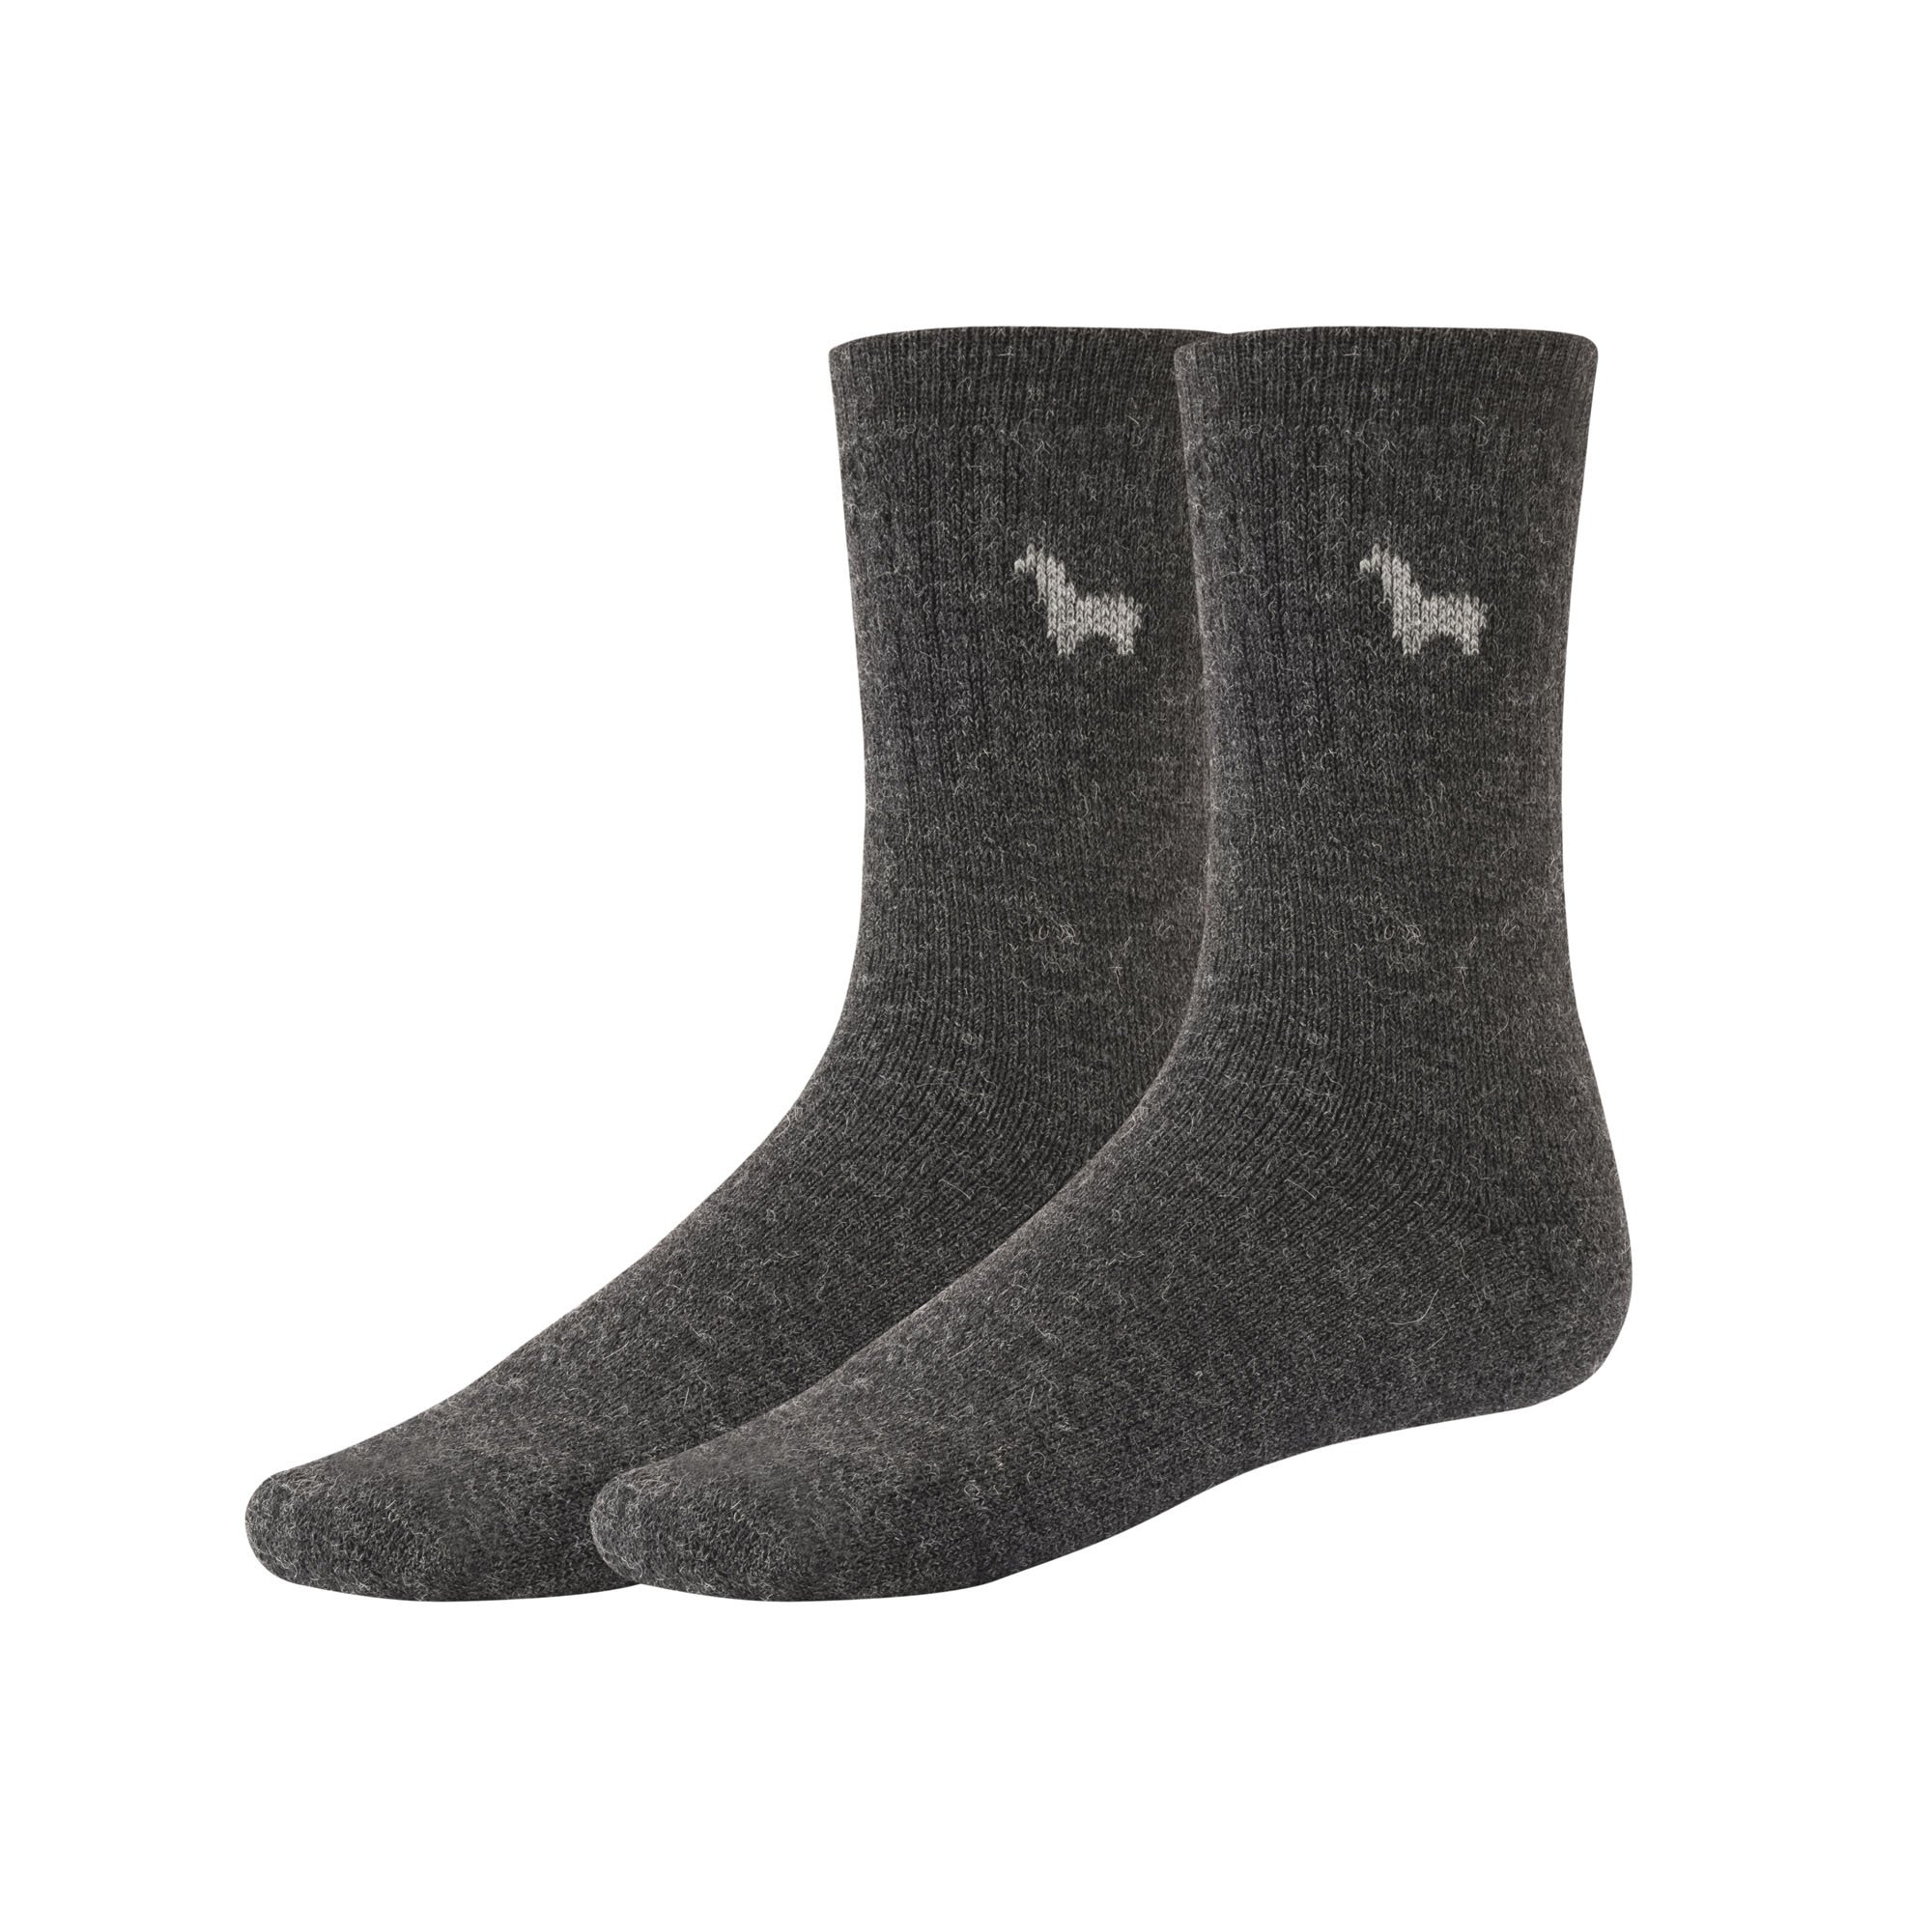 Alpaca Wool Socks for Men - Buy Classic Alpaca Socks for Sale ...